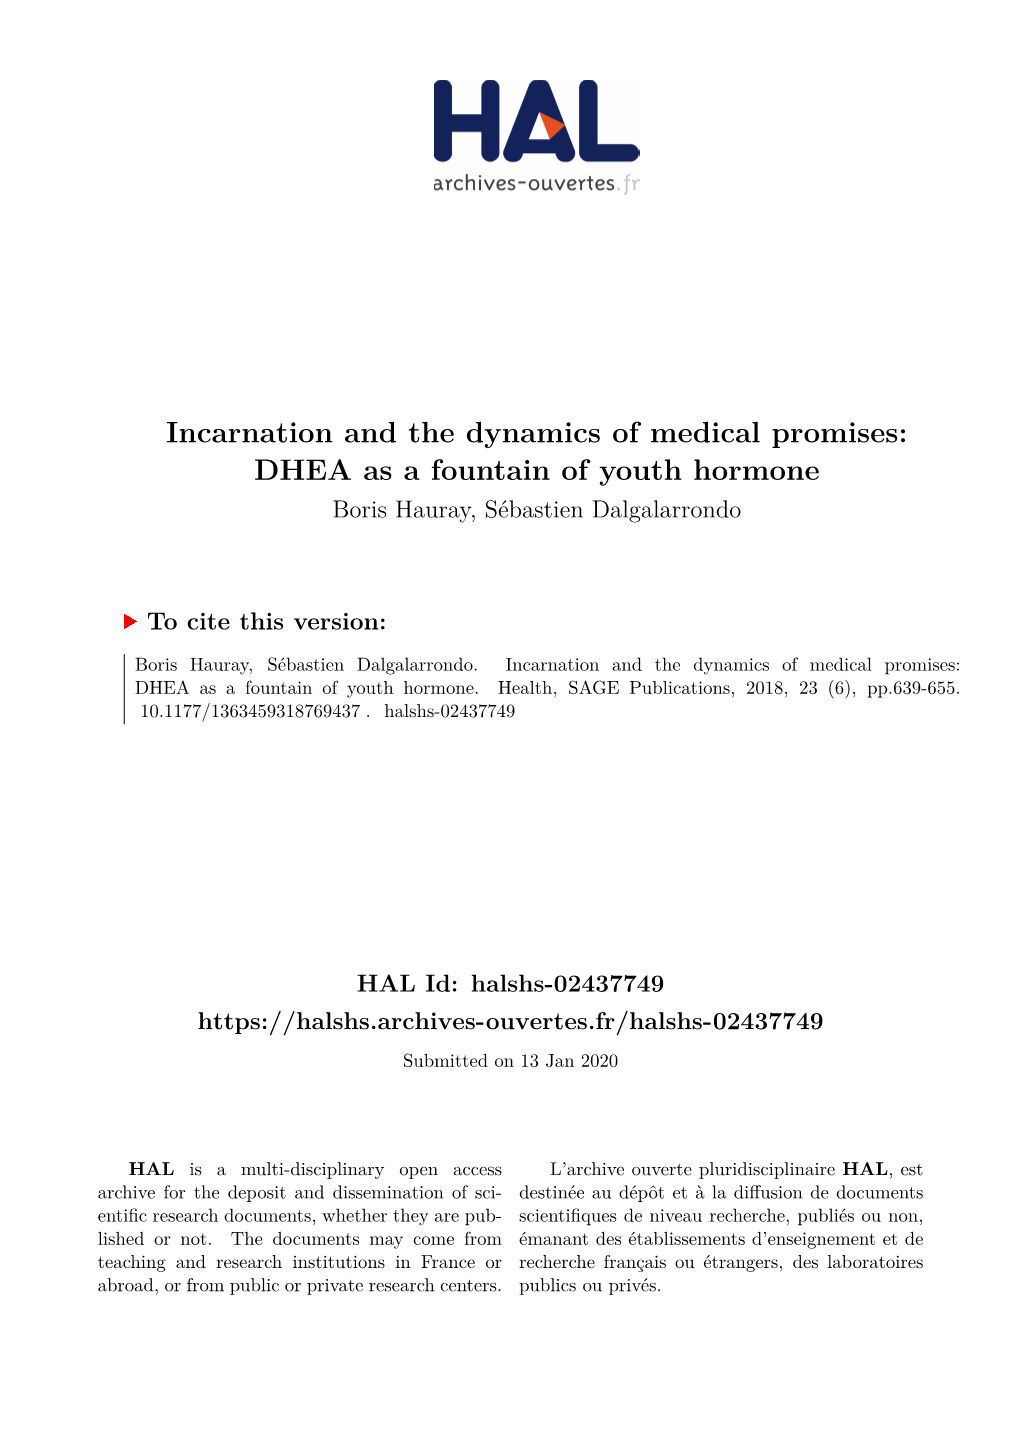 Incarnation and the Dynamics of Medical Promises: DHEA As a Fountain of Youth Hormone Boris Hauray, Sébastien Dalgalarrondo